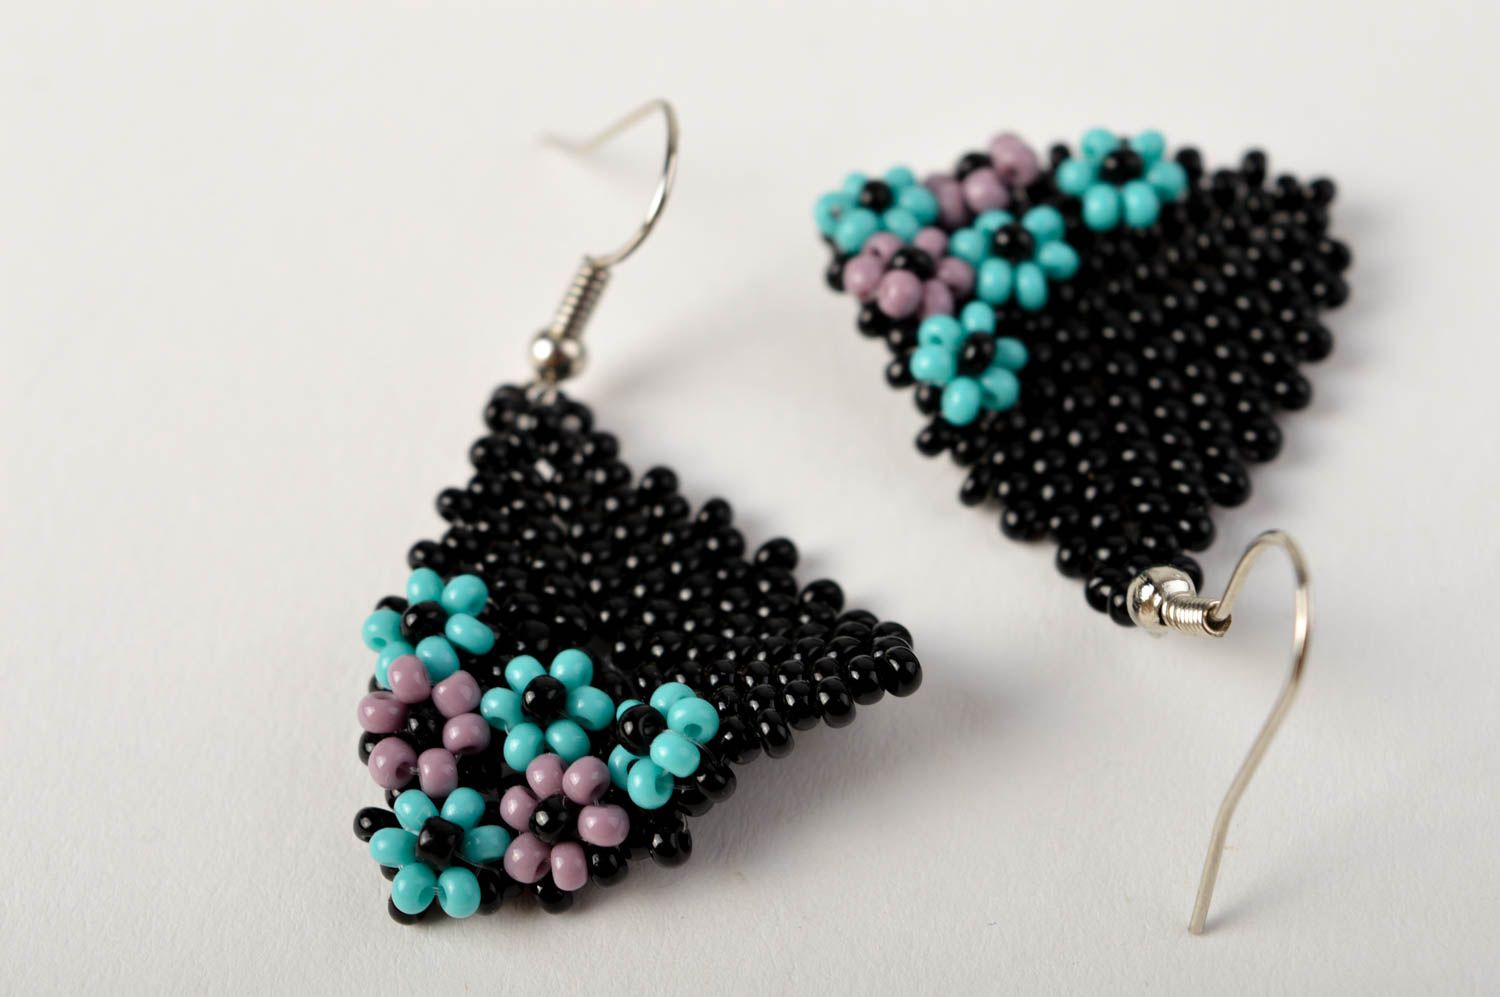 Unusual handmade beaded earrings fashion tips costume jewelry designs gift ideas photo 3